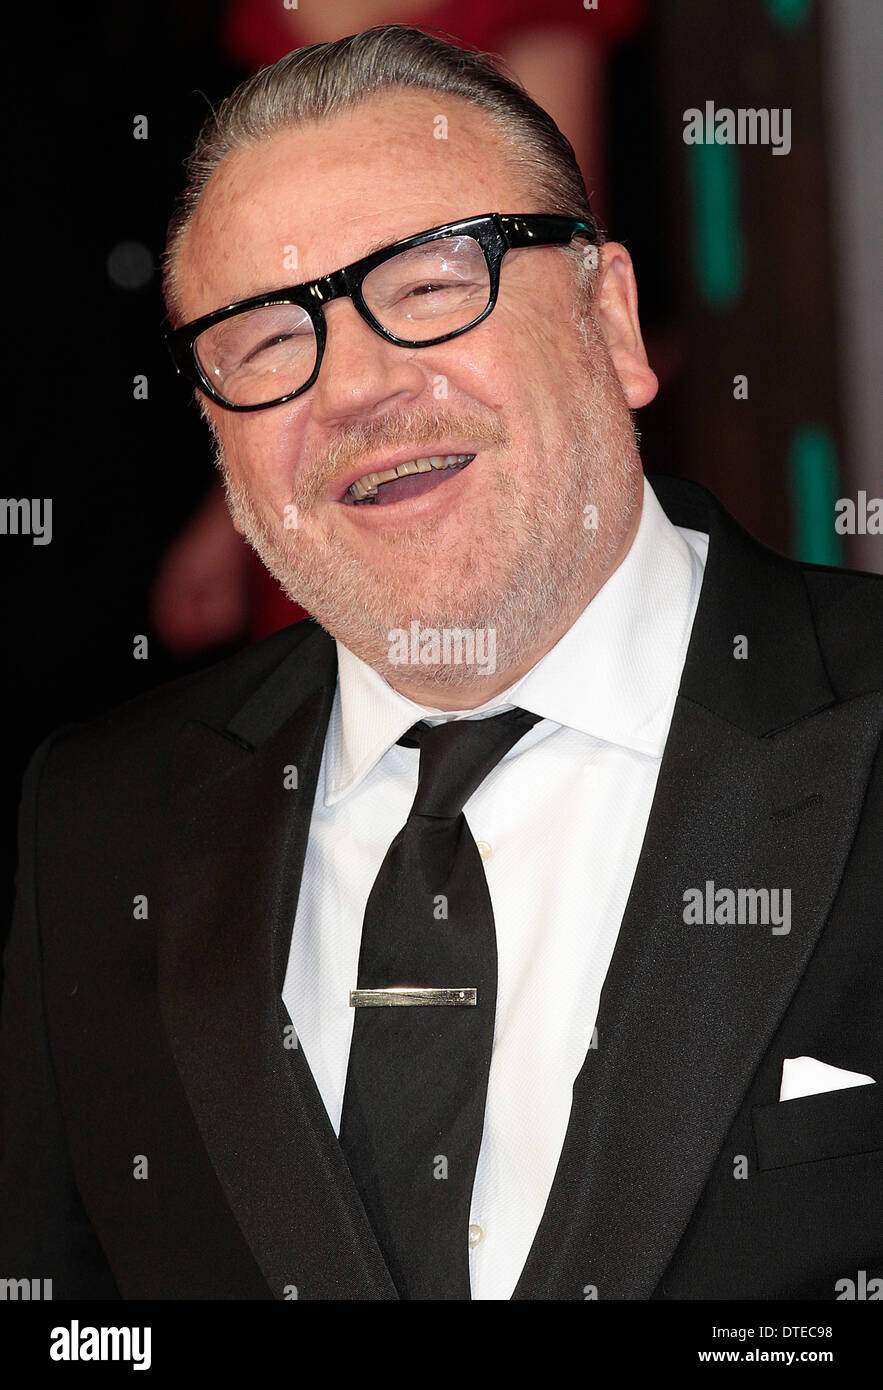 London, UK, 16. Februar 2014 Ray Winstone kommt bei der 2014 British Academy Film Awards (BAFTA) am Royal Opera House, Coven Garten Foto: MRP Stockfoto